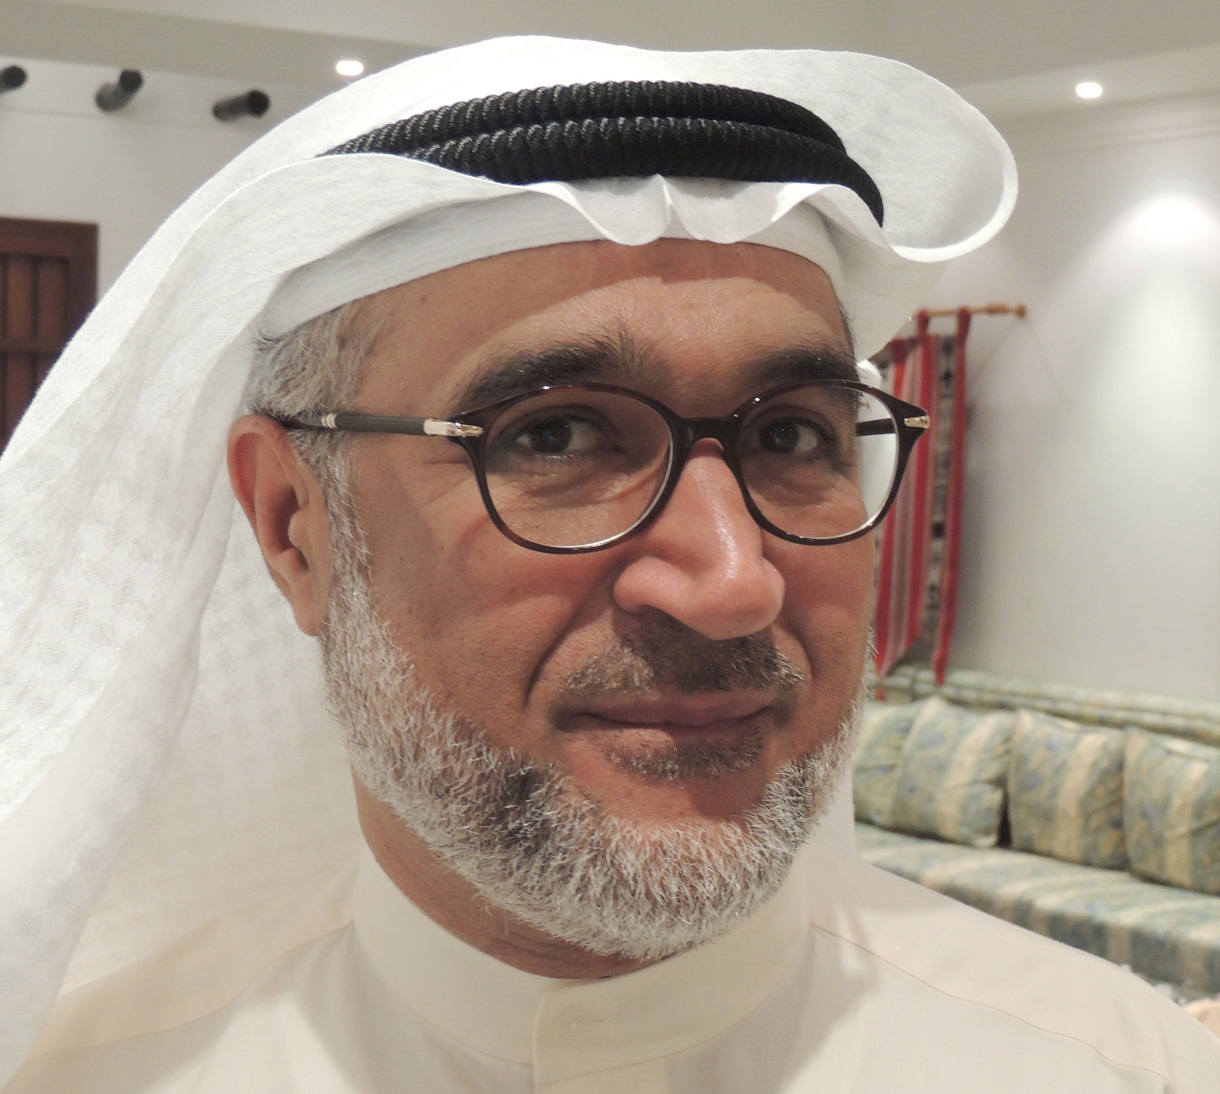 Kuwaiti oil expert Mohammad Al-Shatti